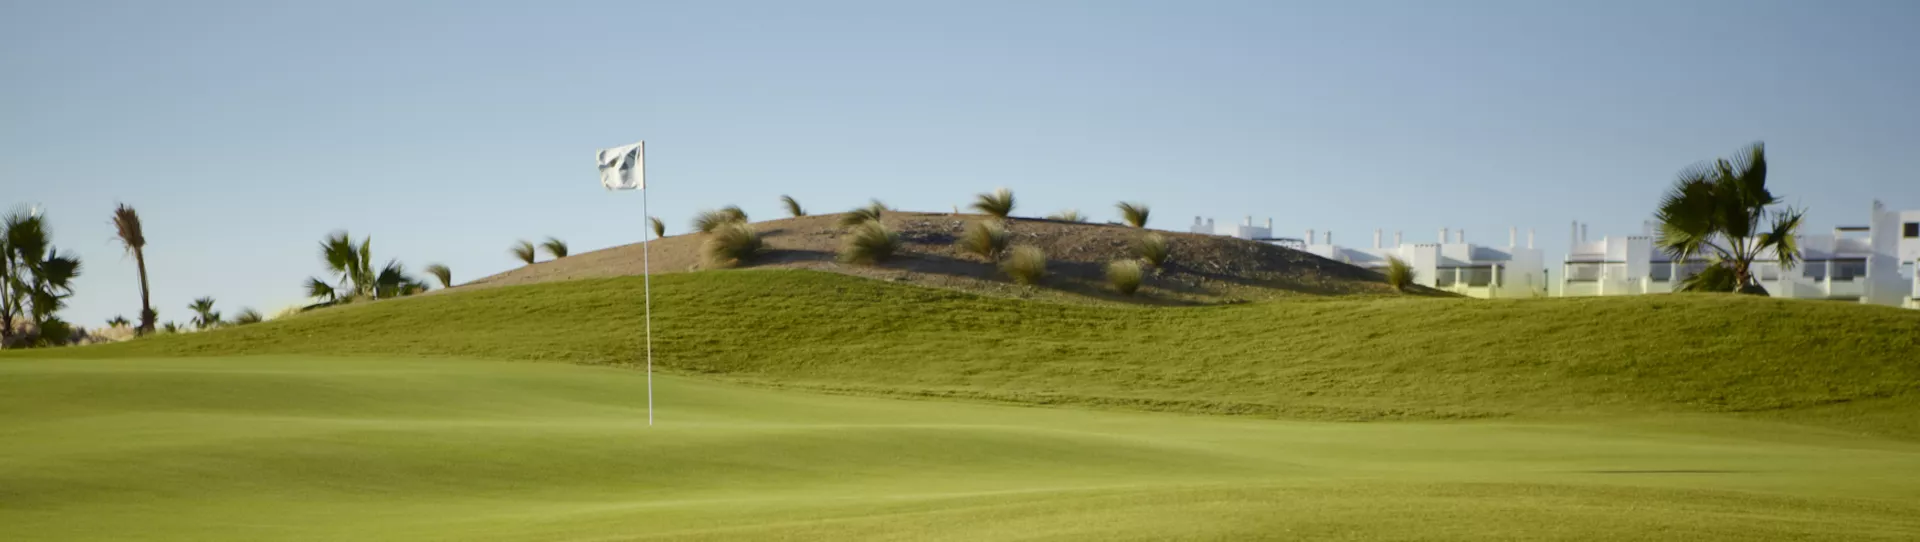 Spain golf courses - Saurines de la Torre Golf Resort - Photo 2